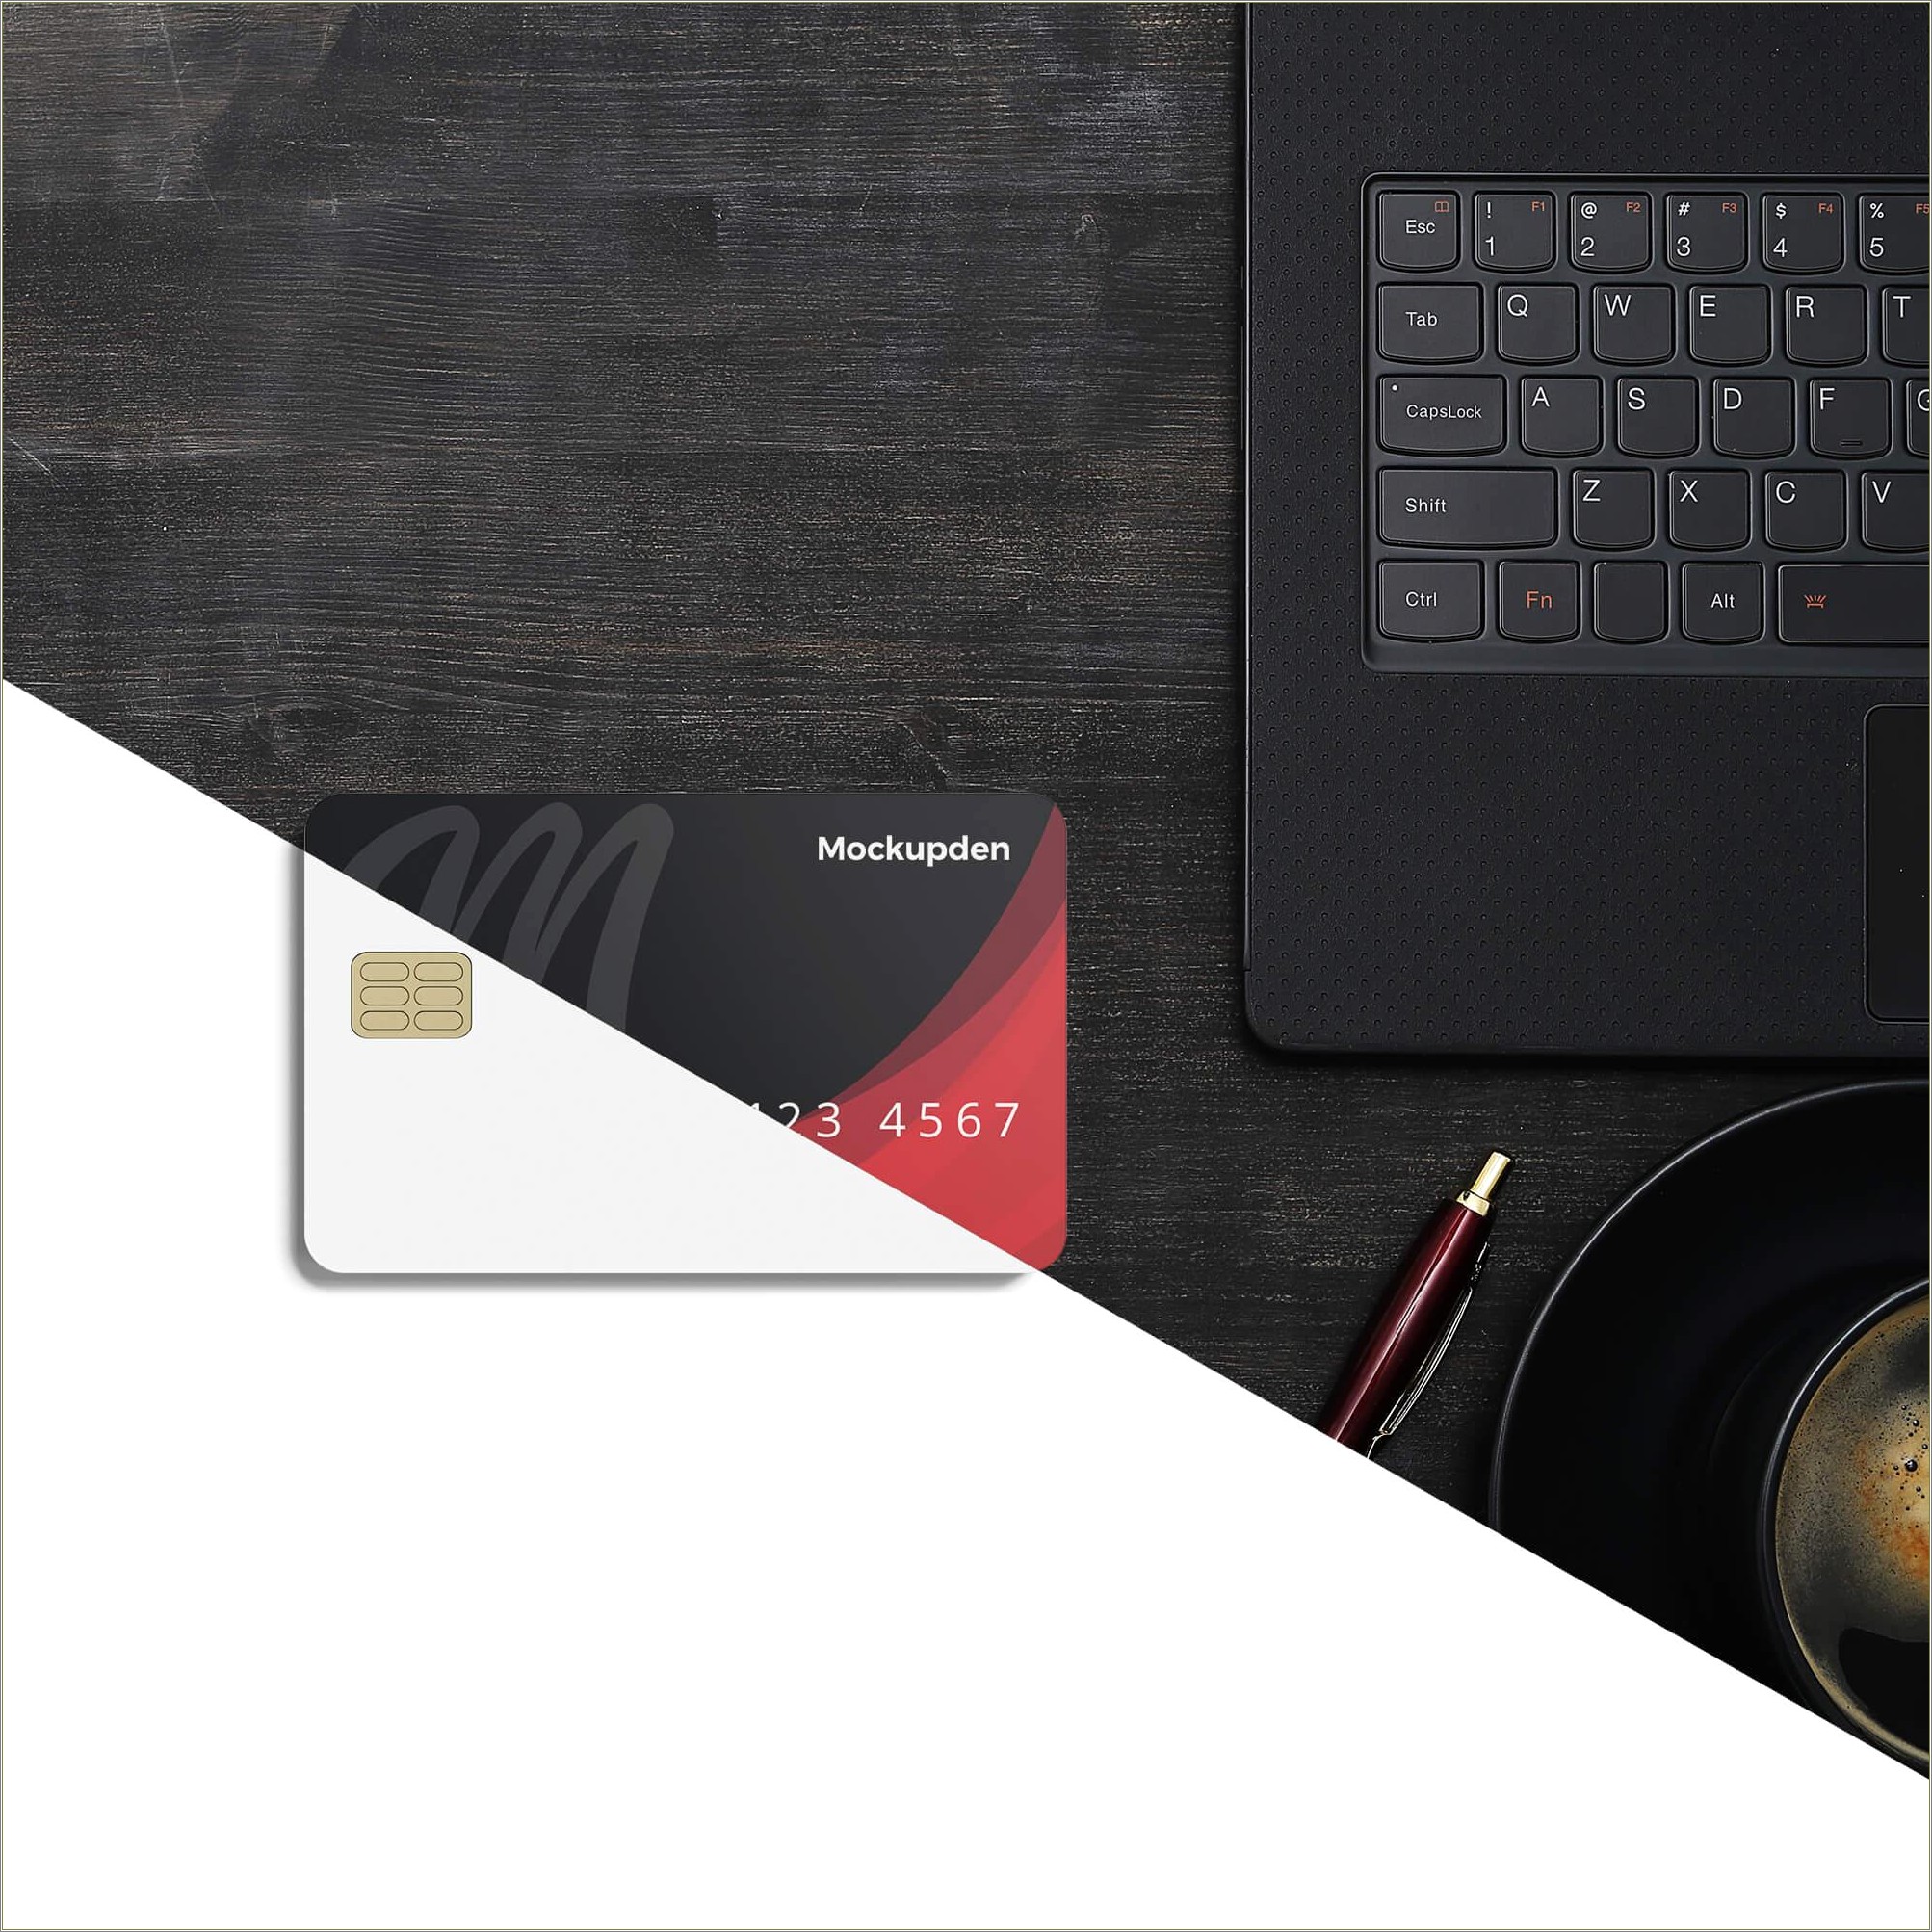 12 Free Credit Card Design Psd Template